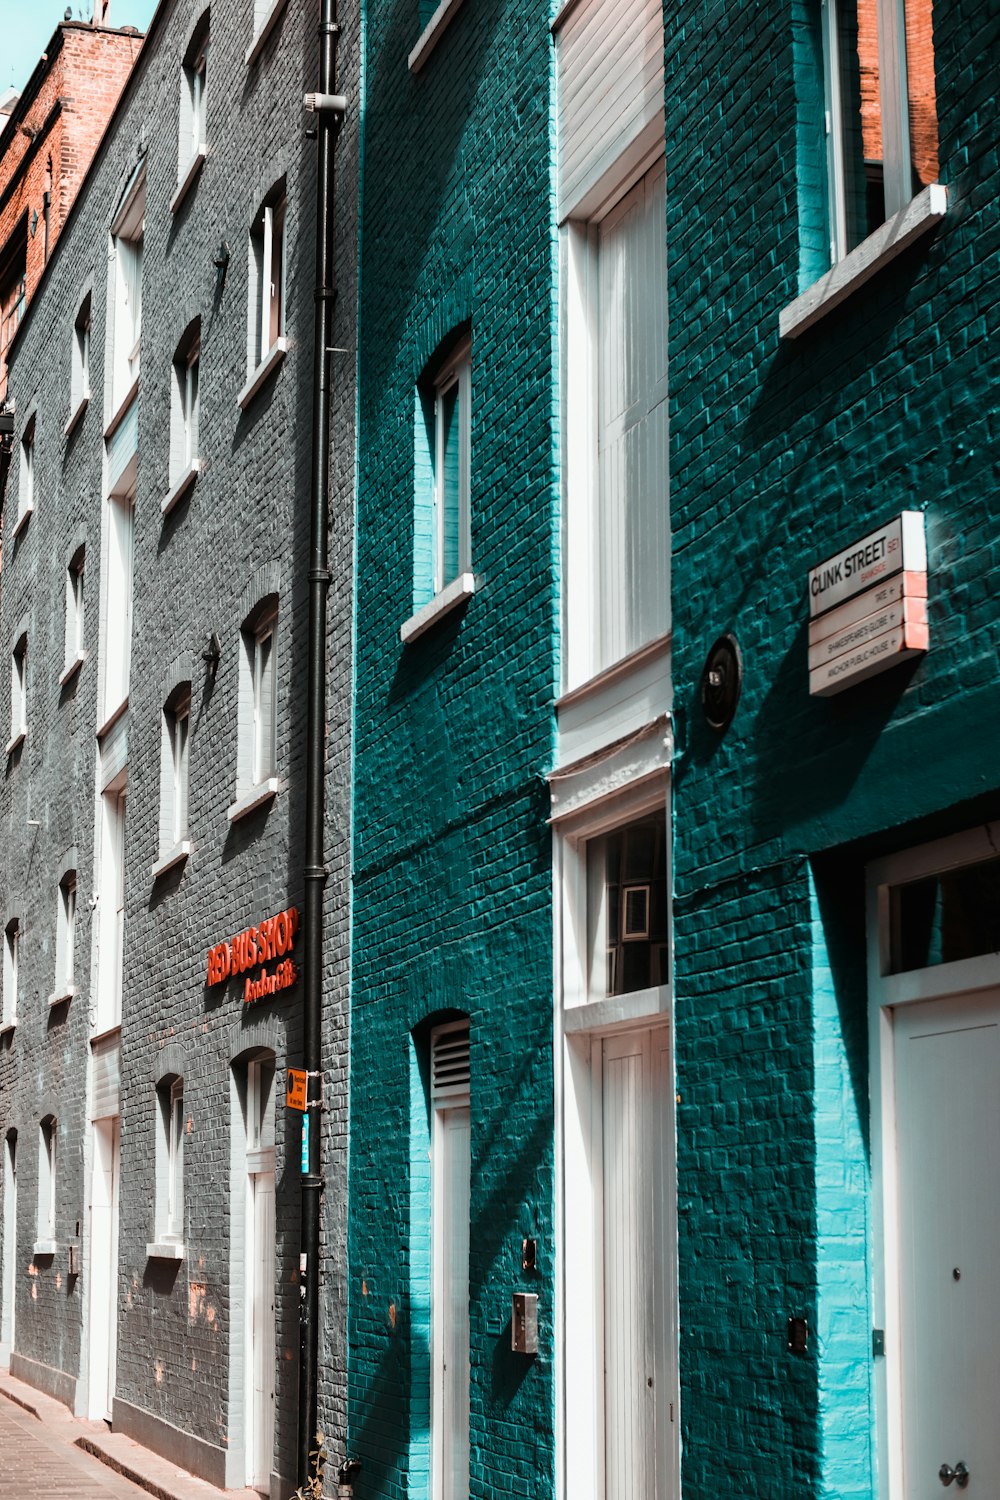 a row of blue brick buildings on a city street